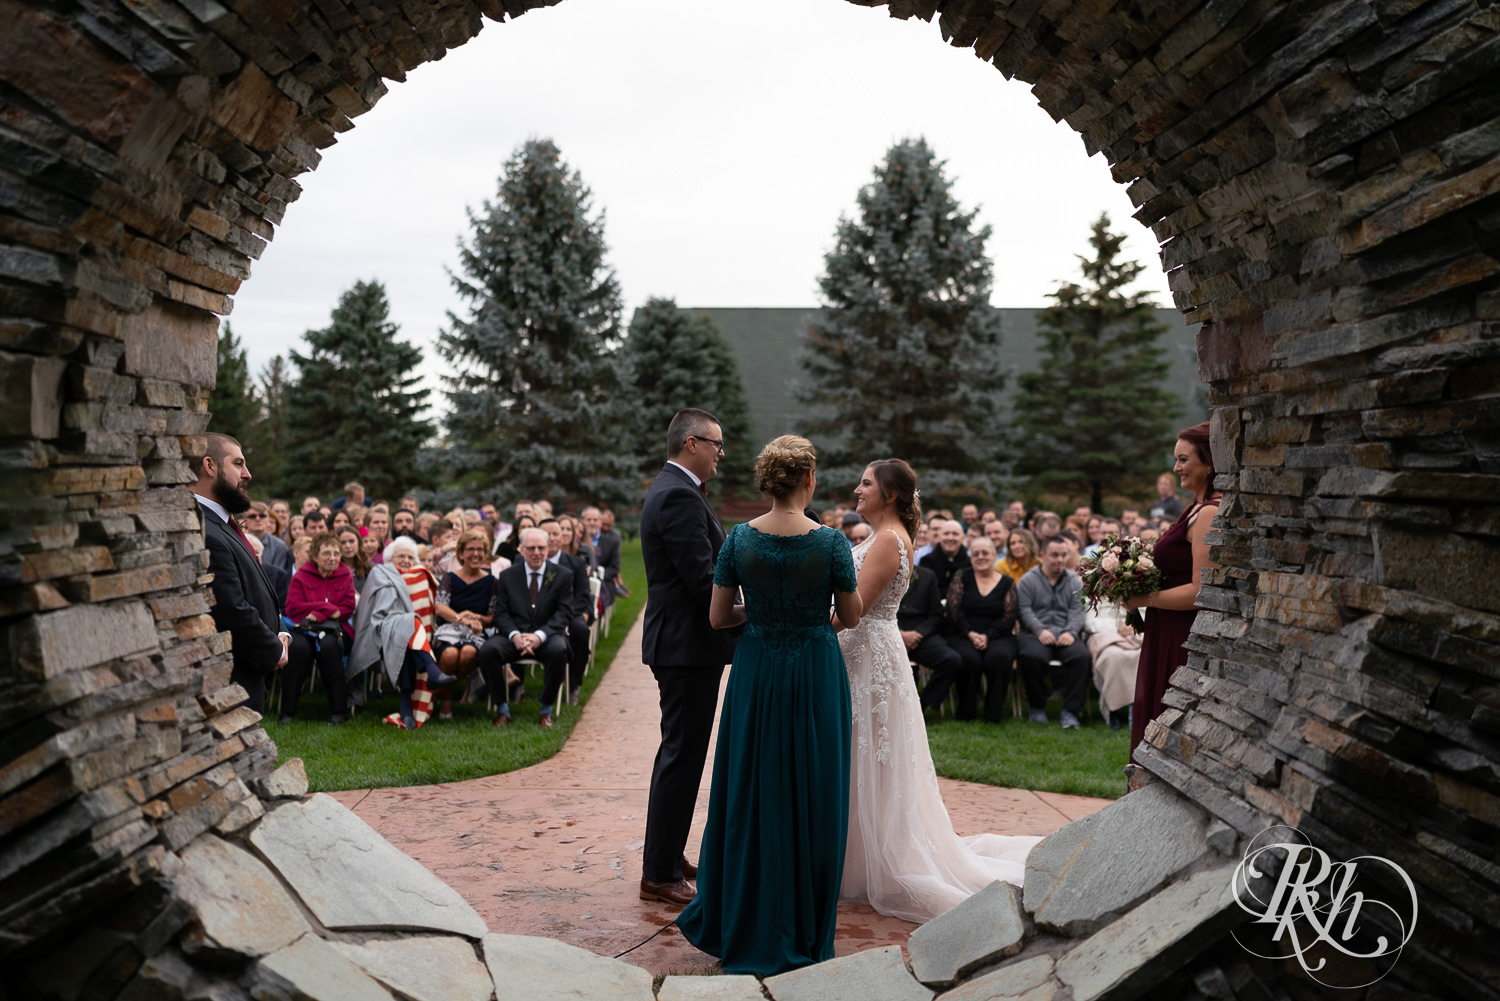 Wedding ceremony on rainy day at Glenhaven Events in Farmington, Minnesota.